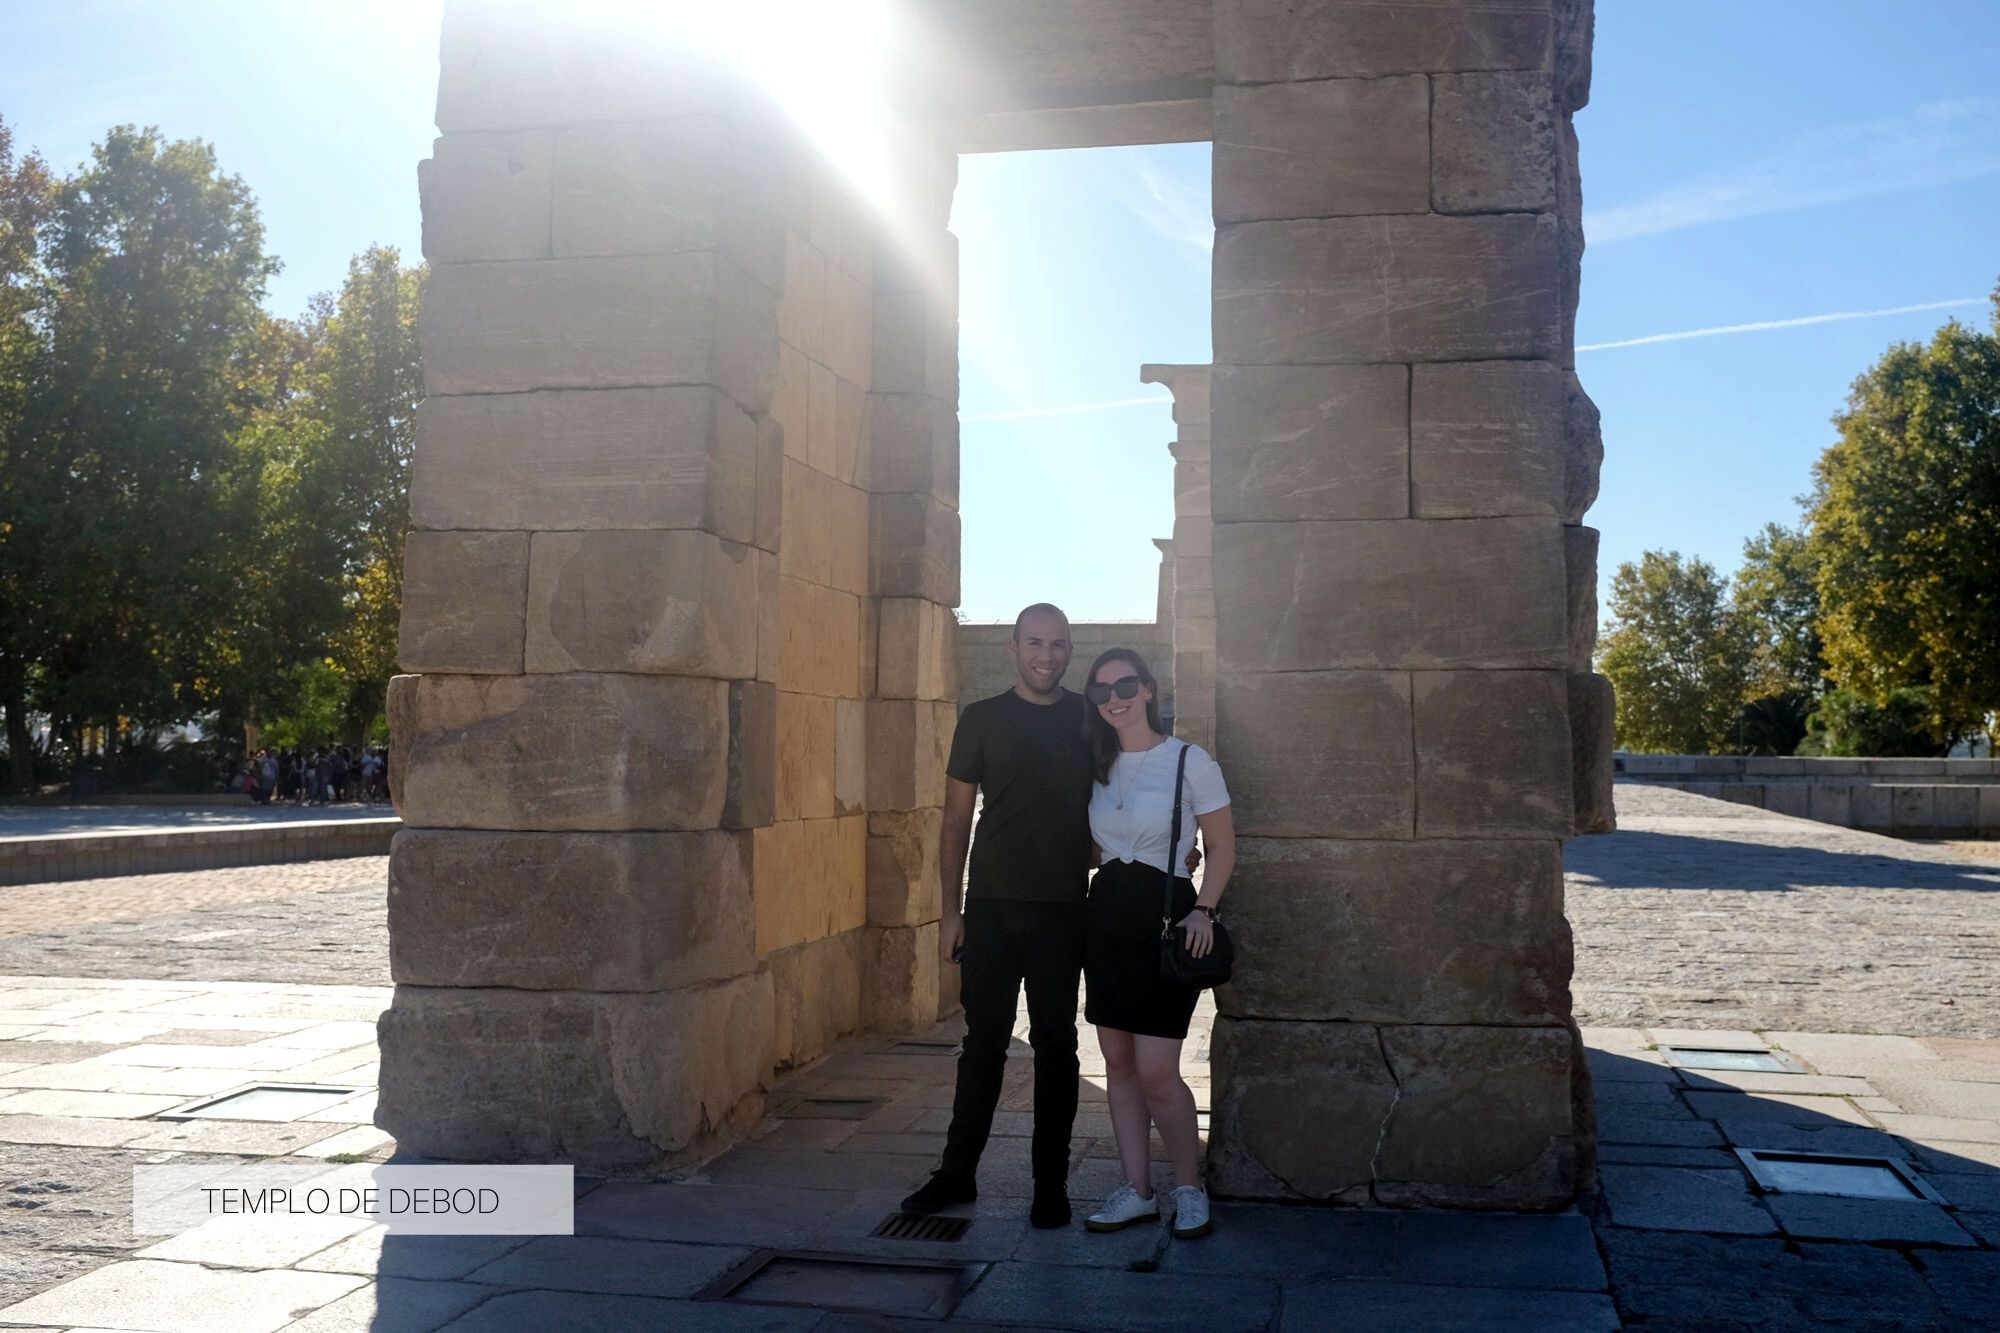 Alyssa and Michael standing outside of the Templo de Debod